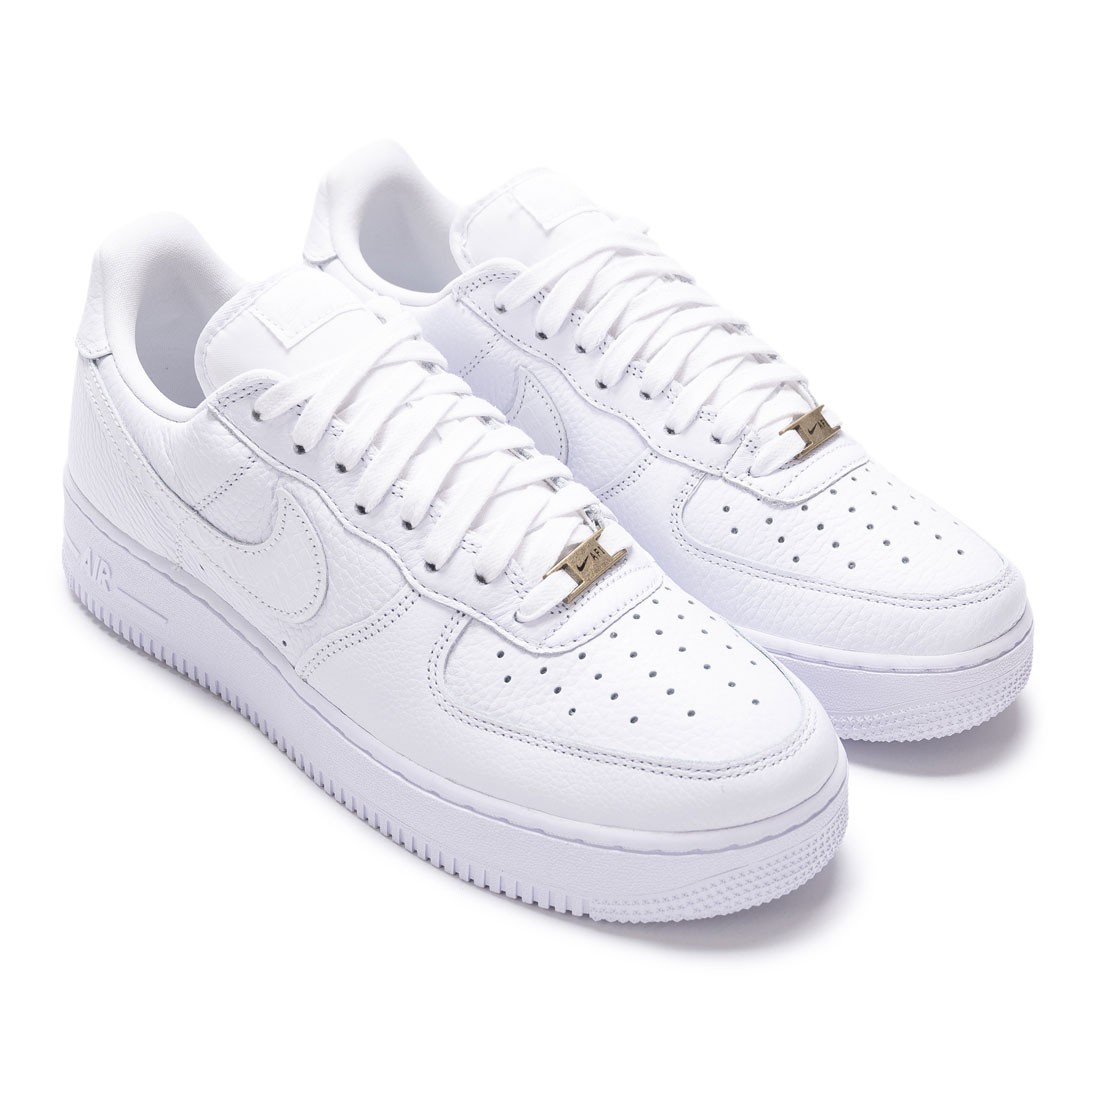 Air Force 1 Mid '07 / Supreme White » Petagadget  White nike shoes, Nike  shoes air force, Custom nike shoes